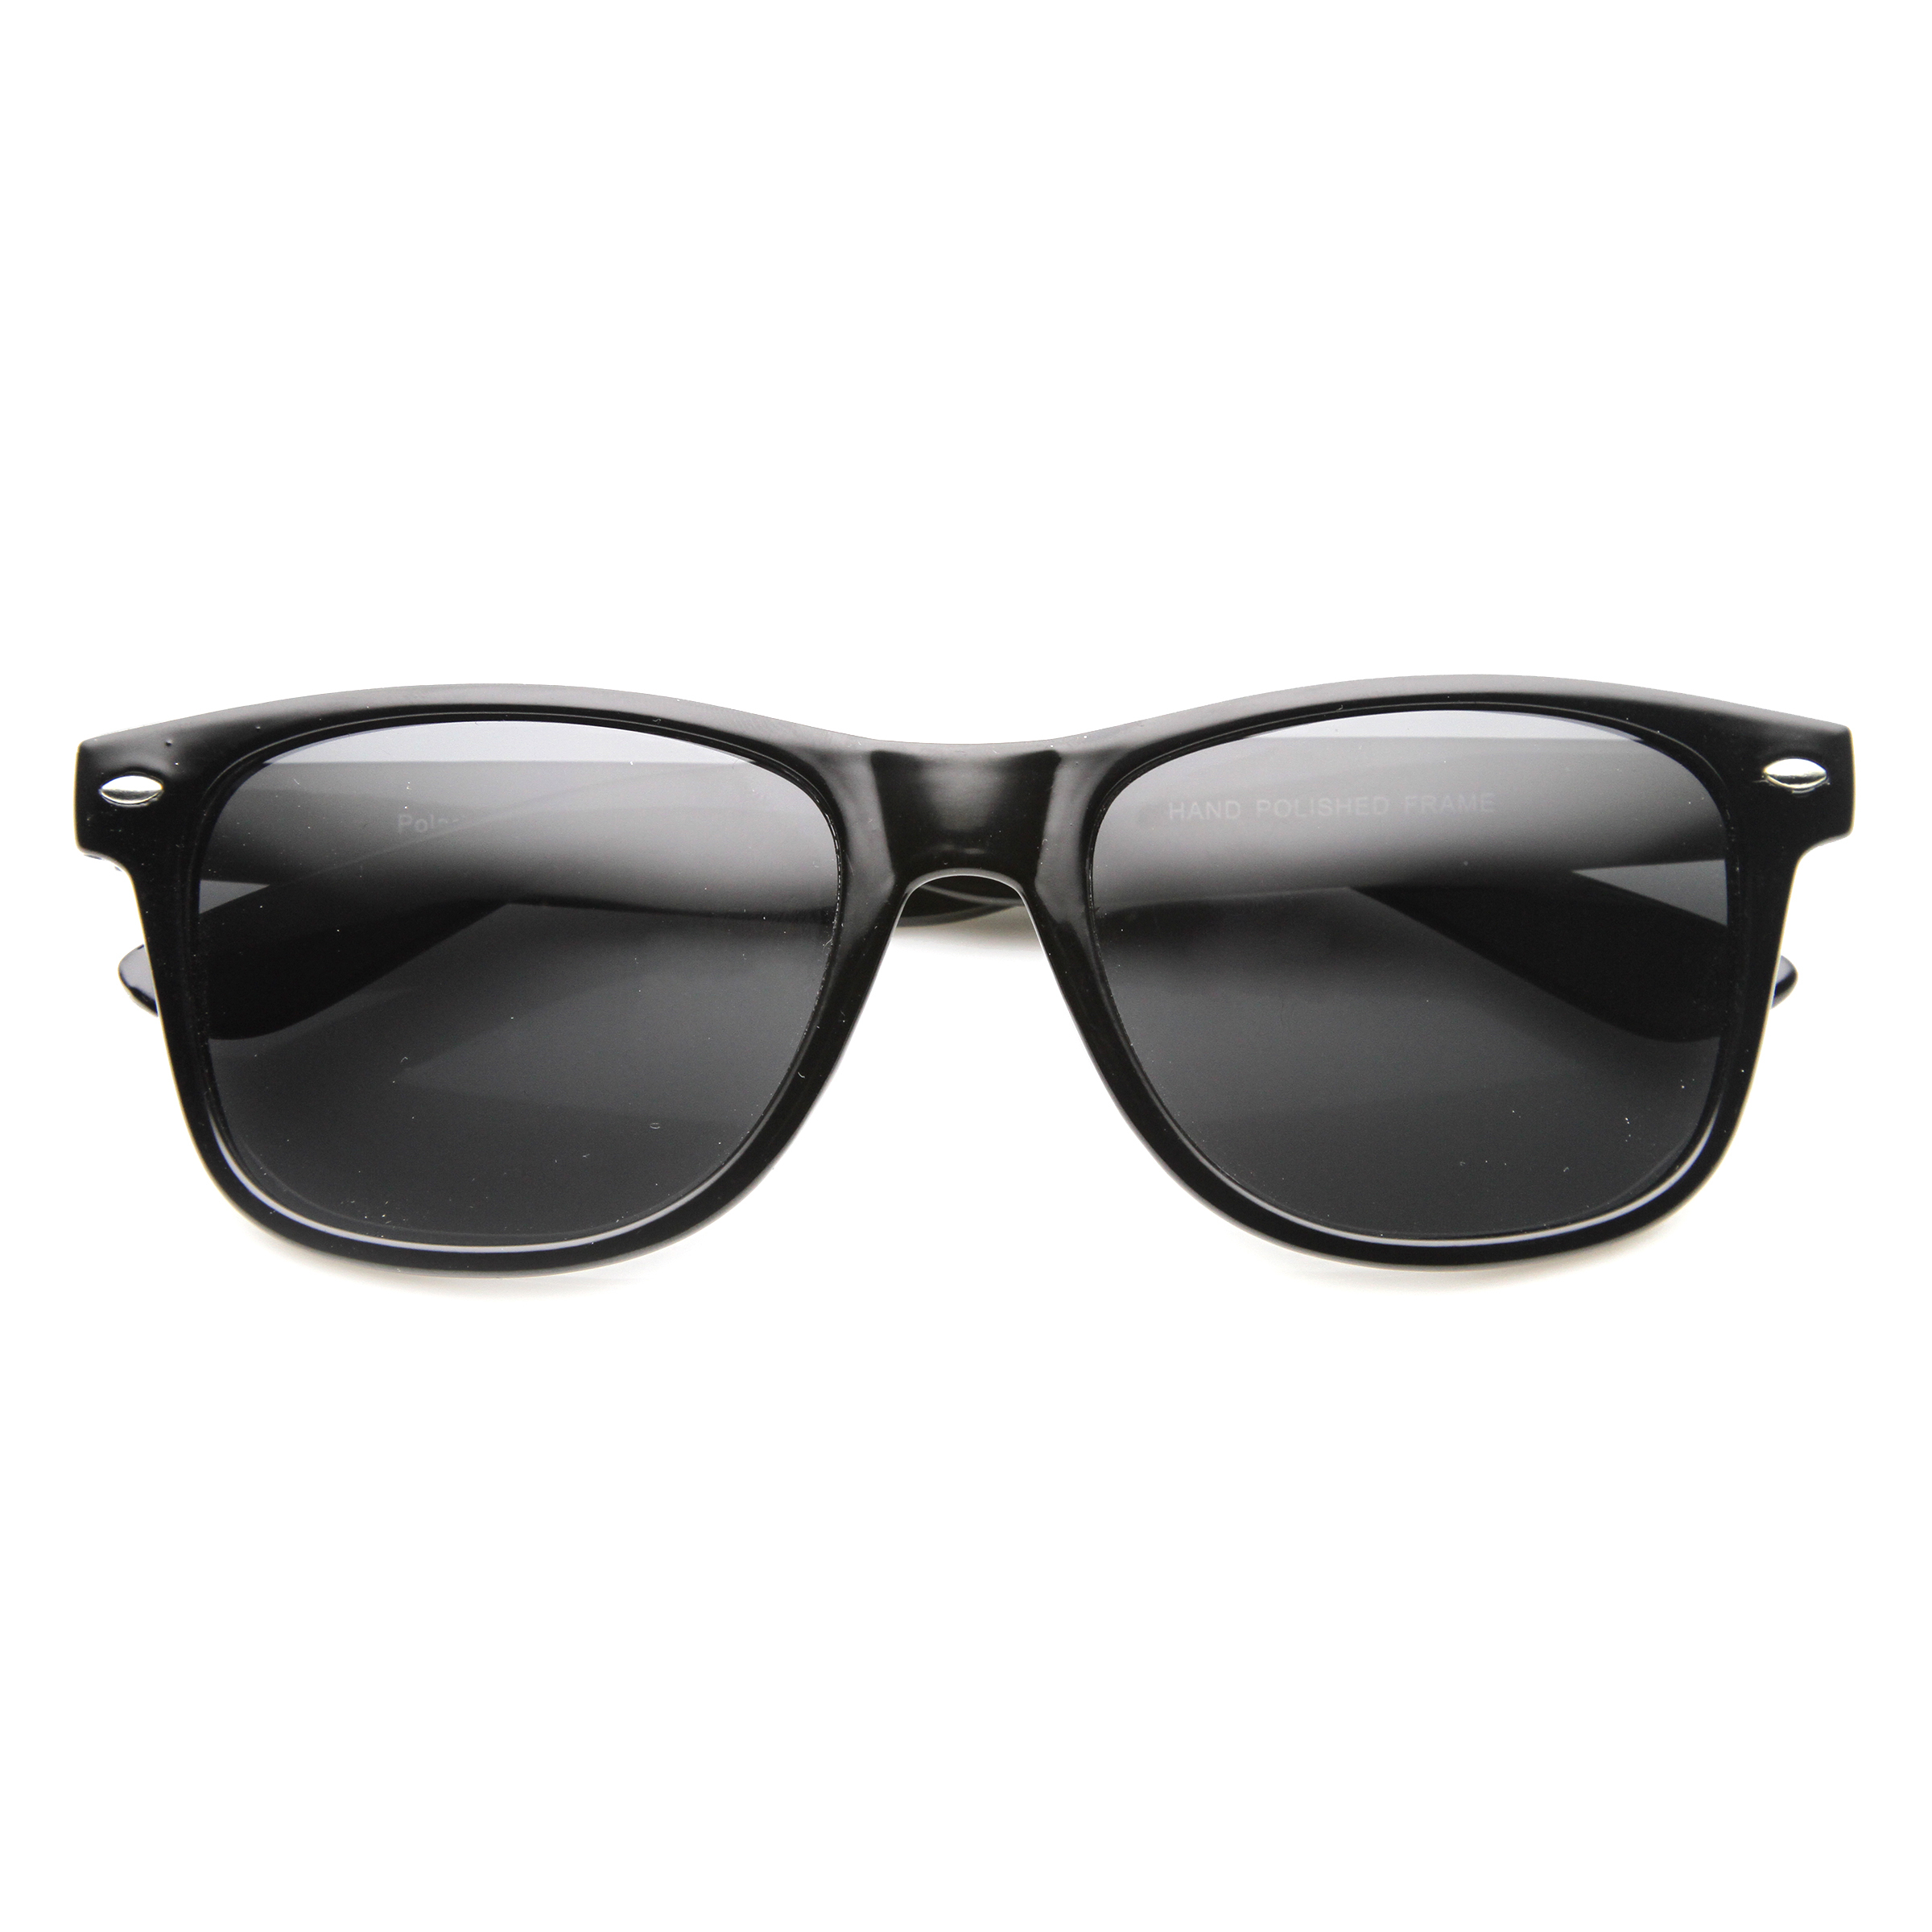 Classic 80s Retro Large Classic Horned Rim Style Sunglasses Eyewear - 8452 - Red